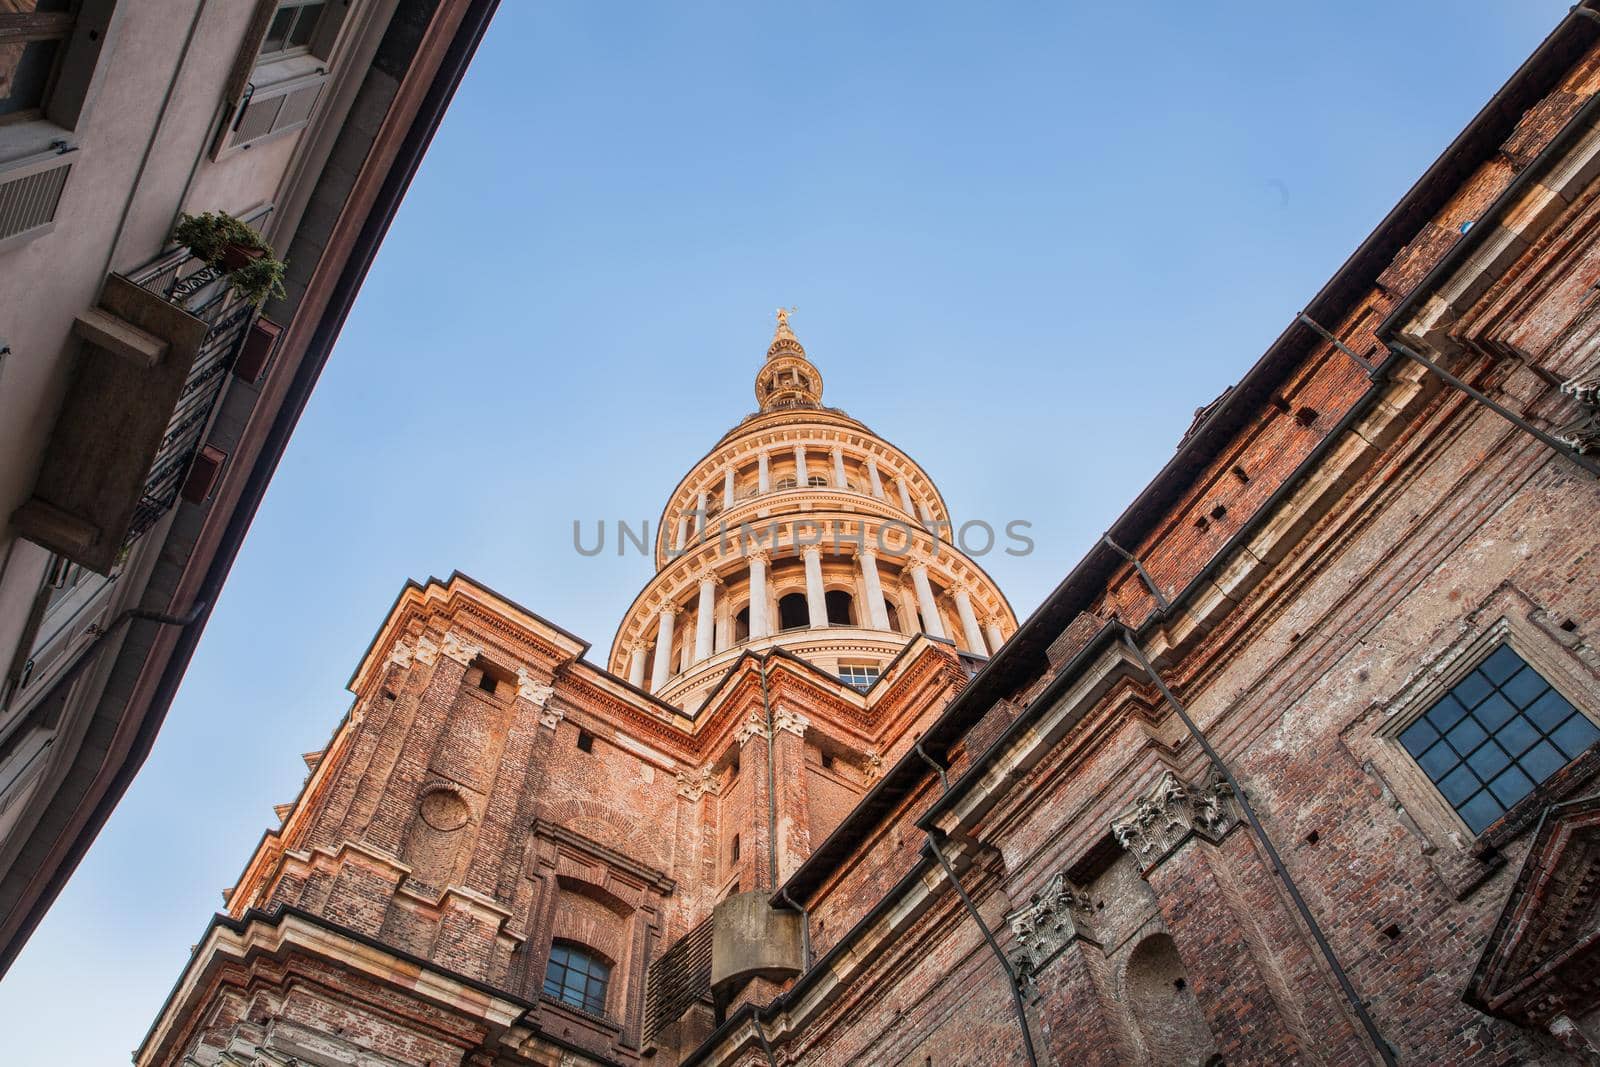 View of the famous Cupola of the San Gaudenzio Basilica in Novara, Italy.